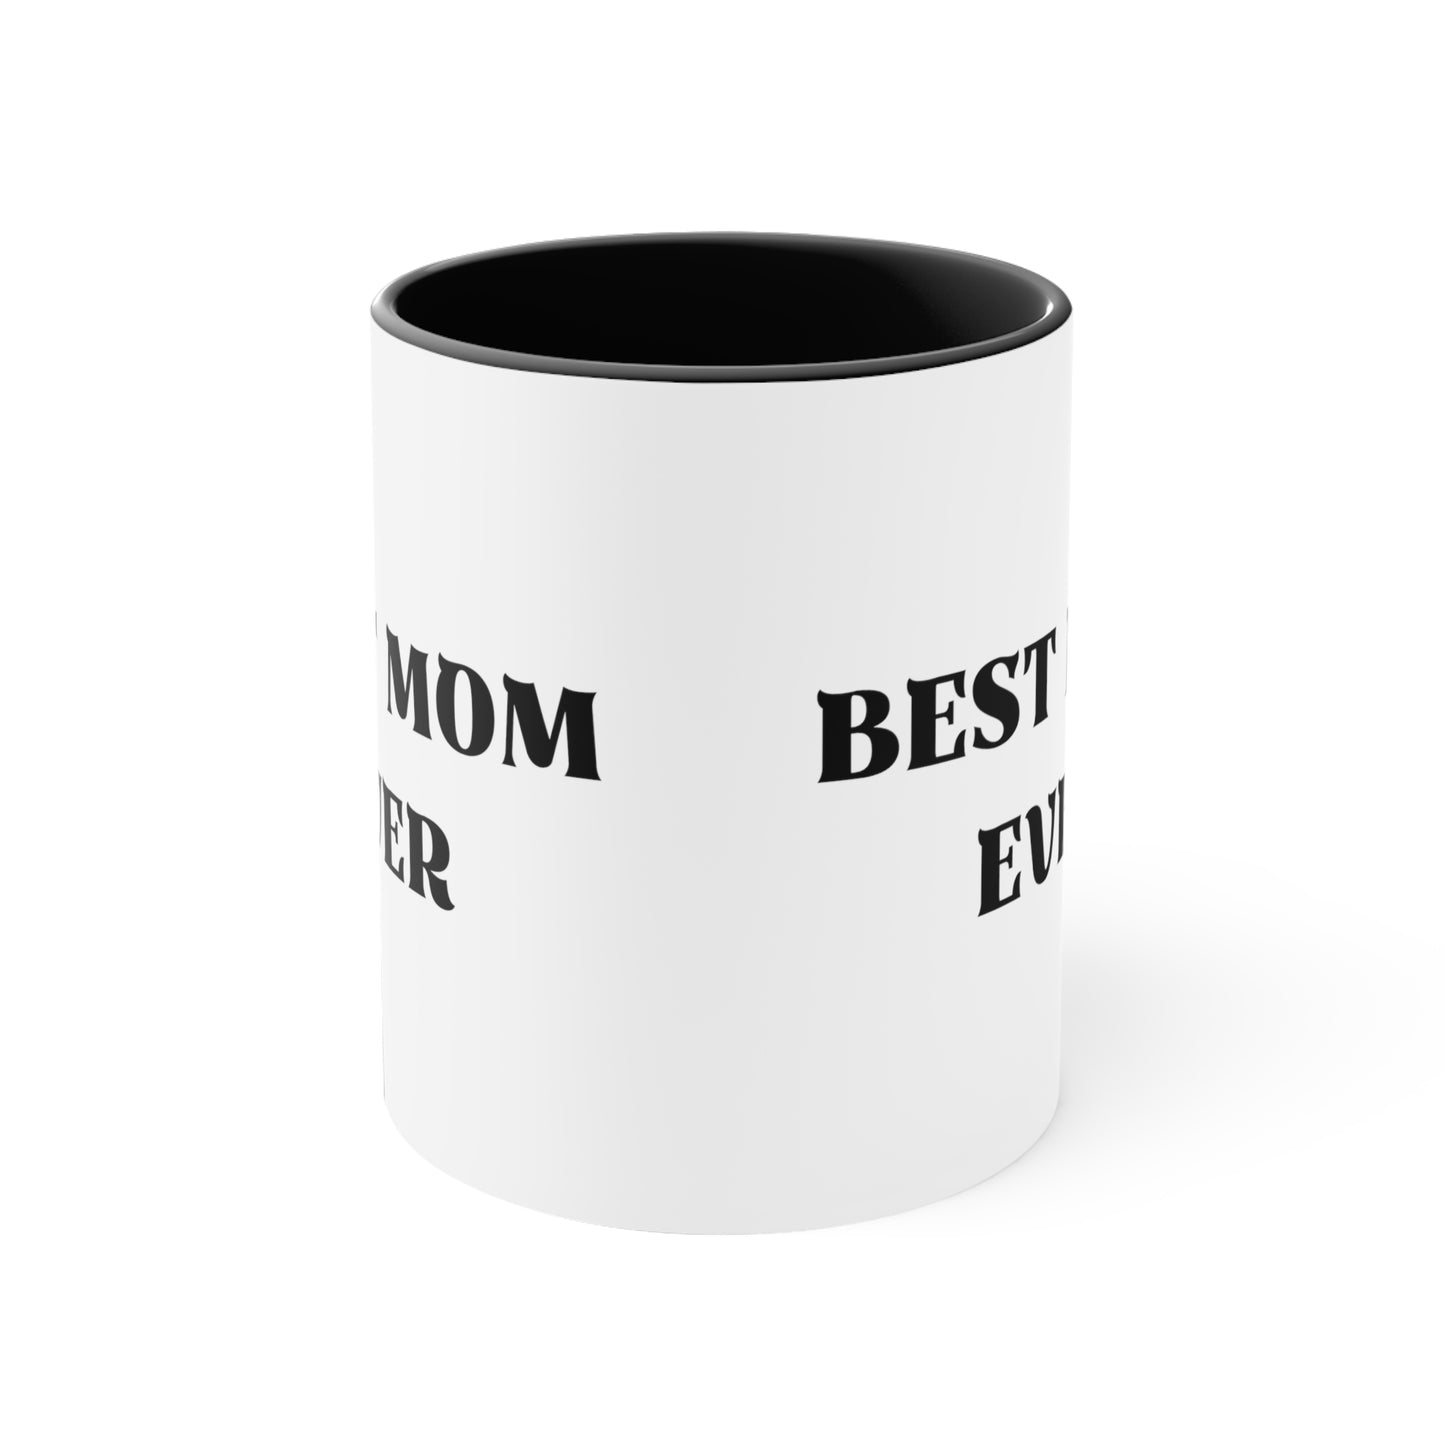 Best Mom Ever Birthday Accent Coffee Mug, 11oz, Gift for Mom